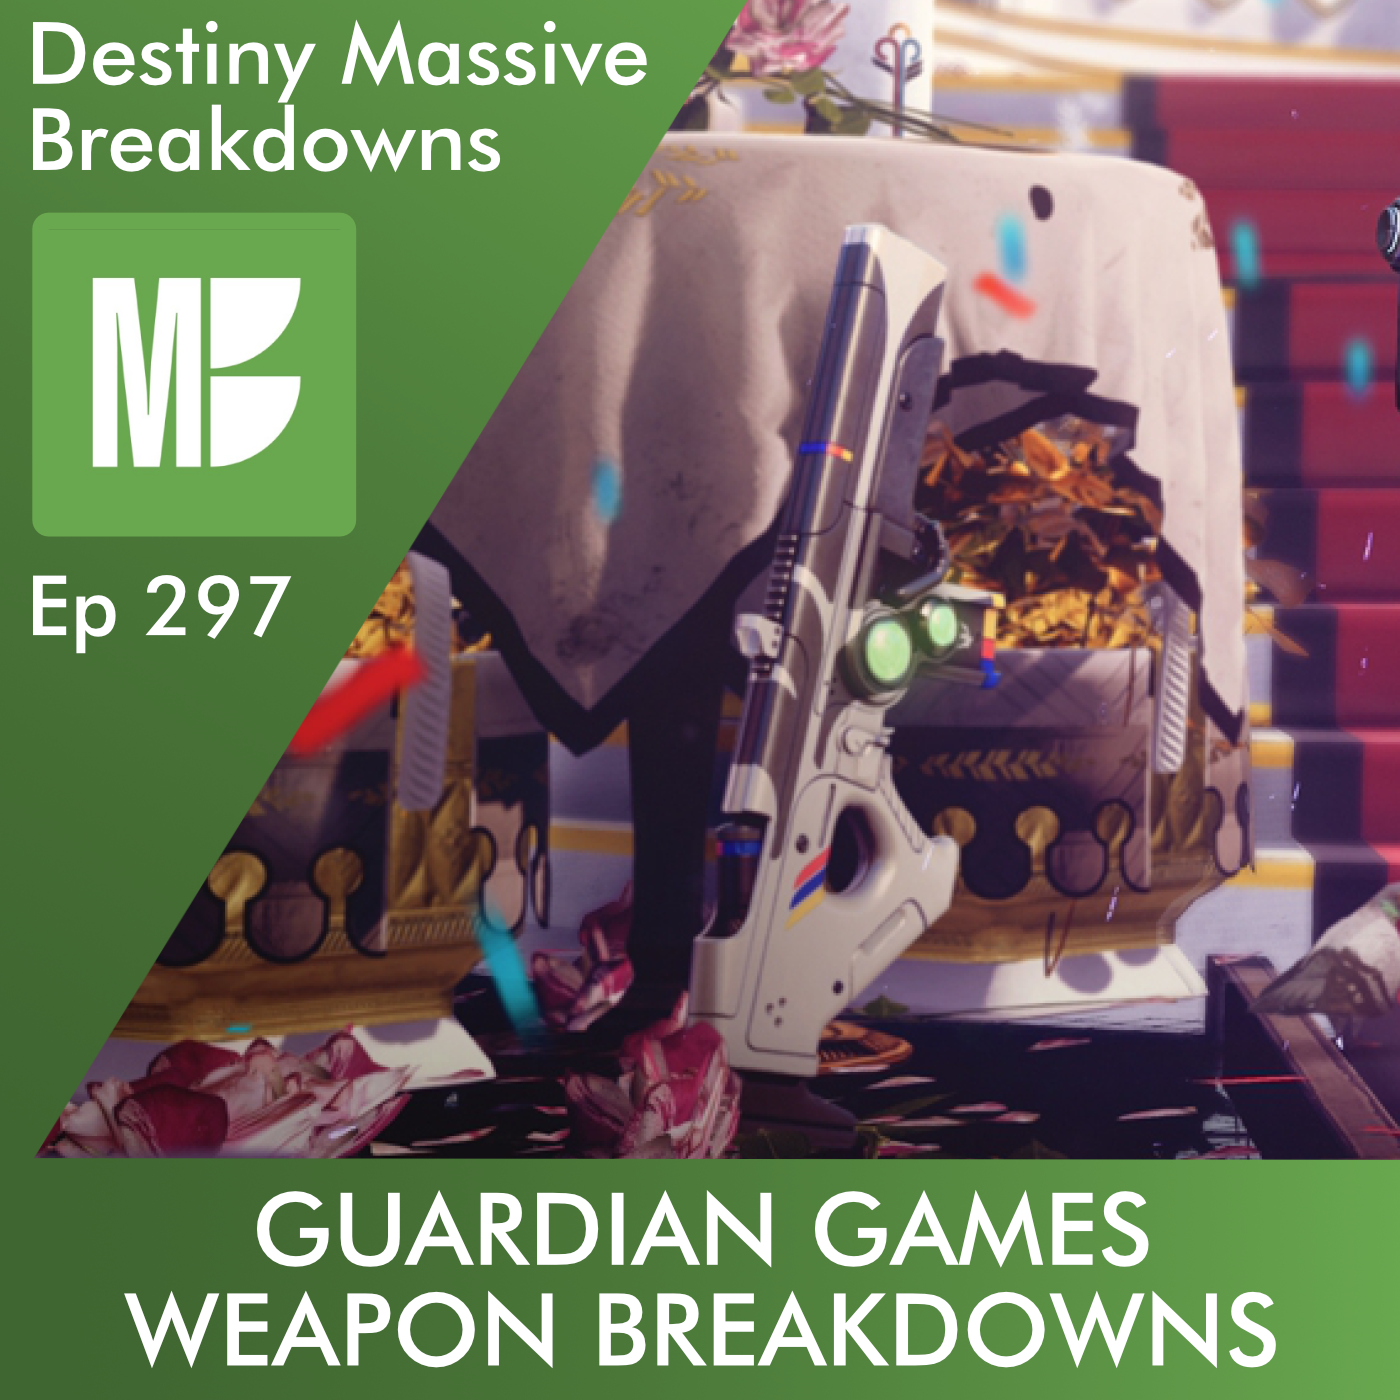 Ep 297: Guardian Games Weapon Breakdowns